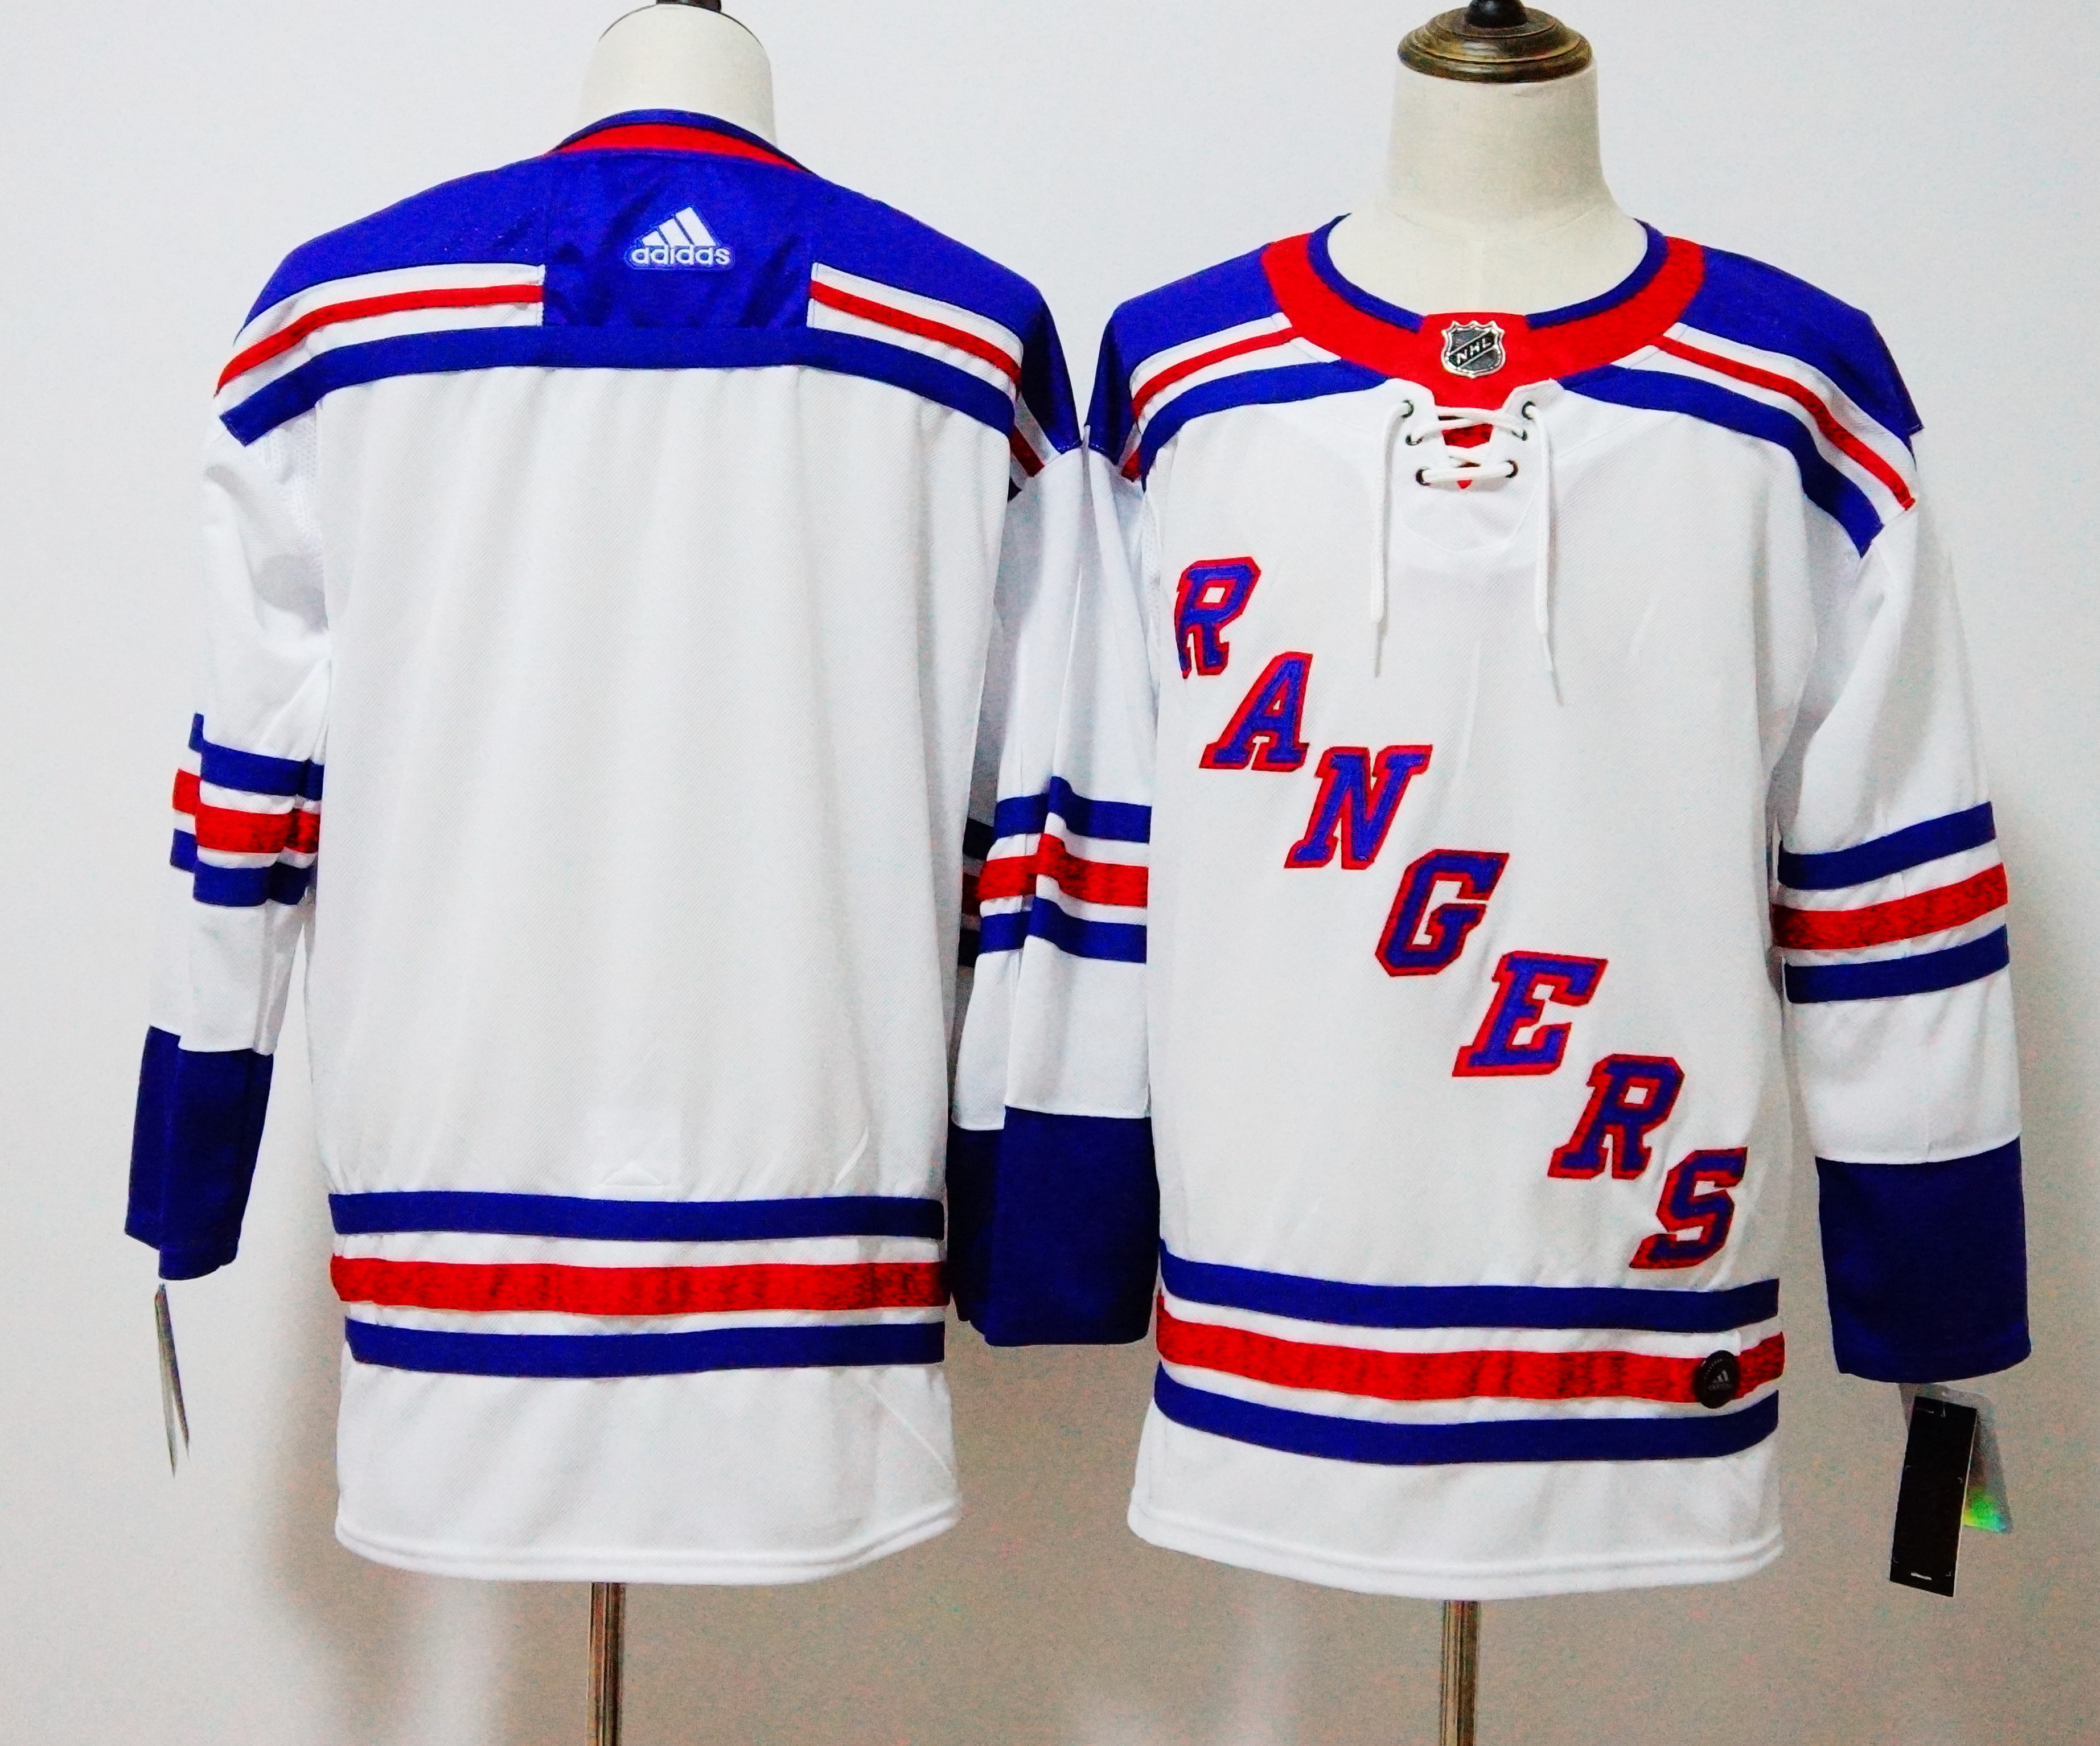 Men's Adidas New York Rangers White Stitched NHL Jersey